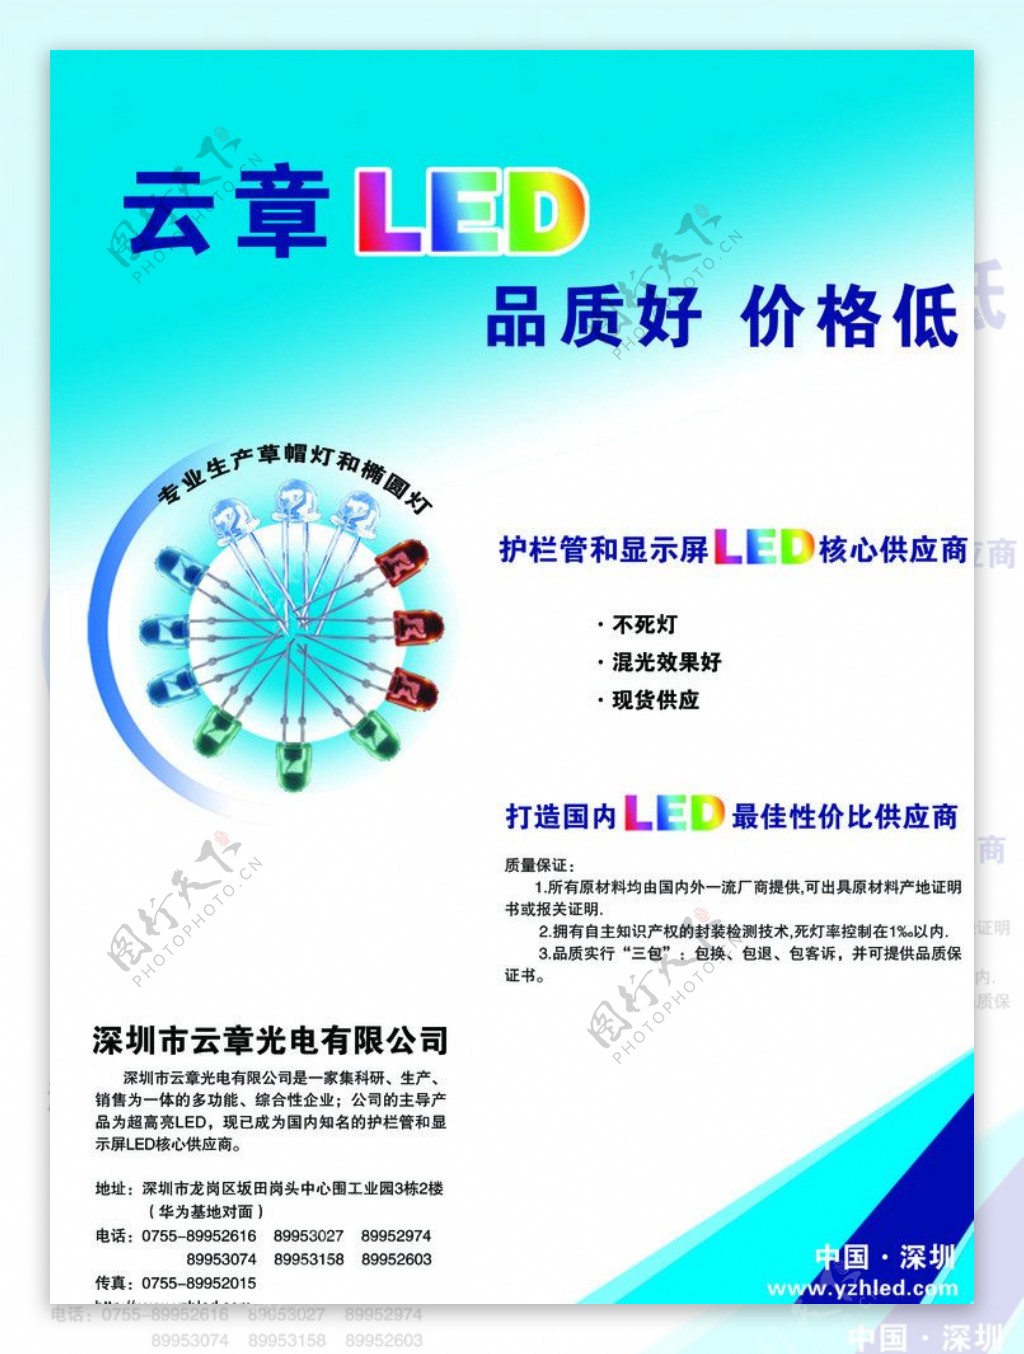 LED单页广告图片